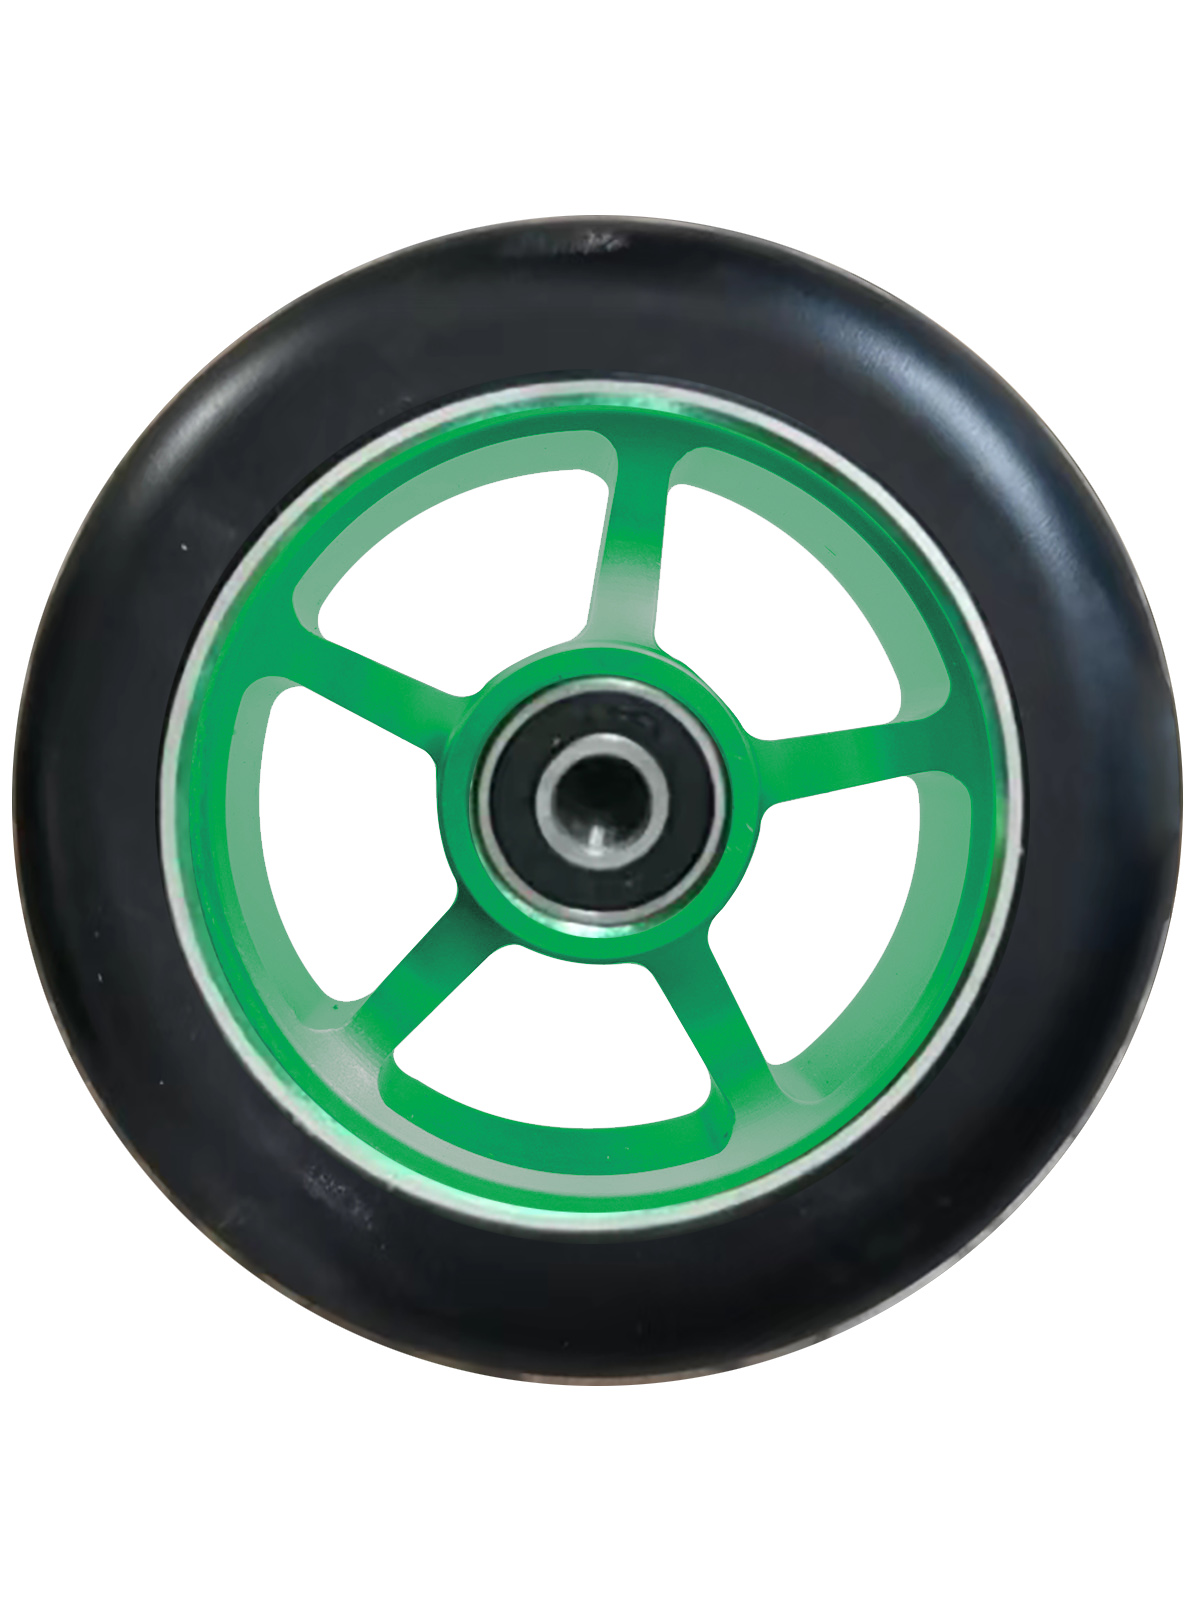 Колесо для трюкового самоката Yezz 100 мм 5S-5 спиц одинарных зеленый